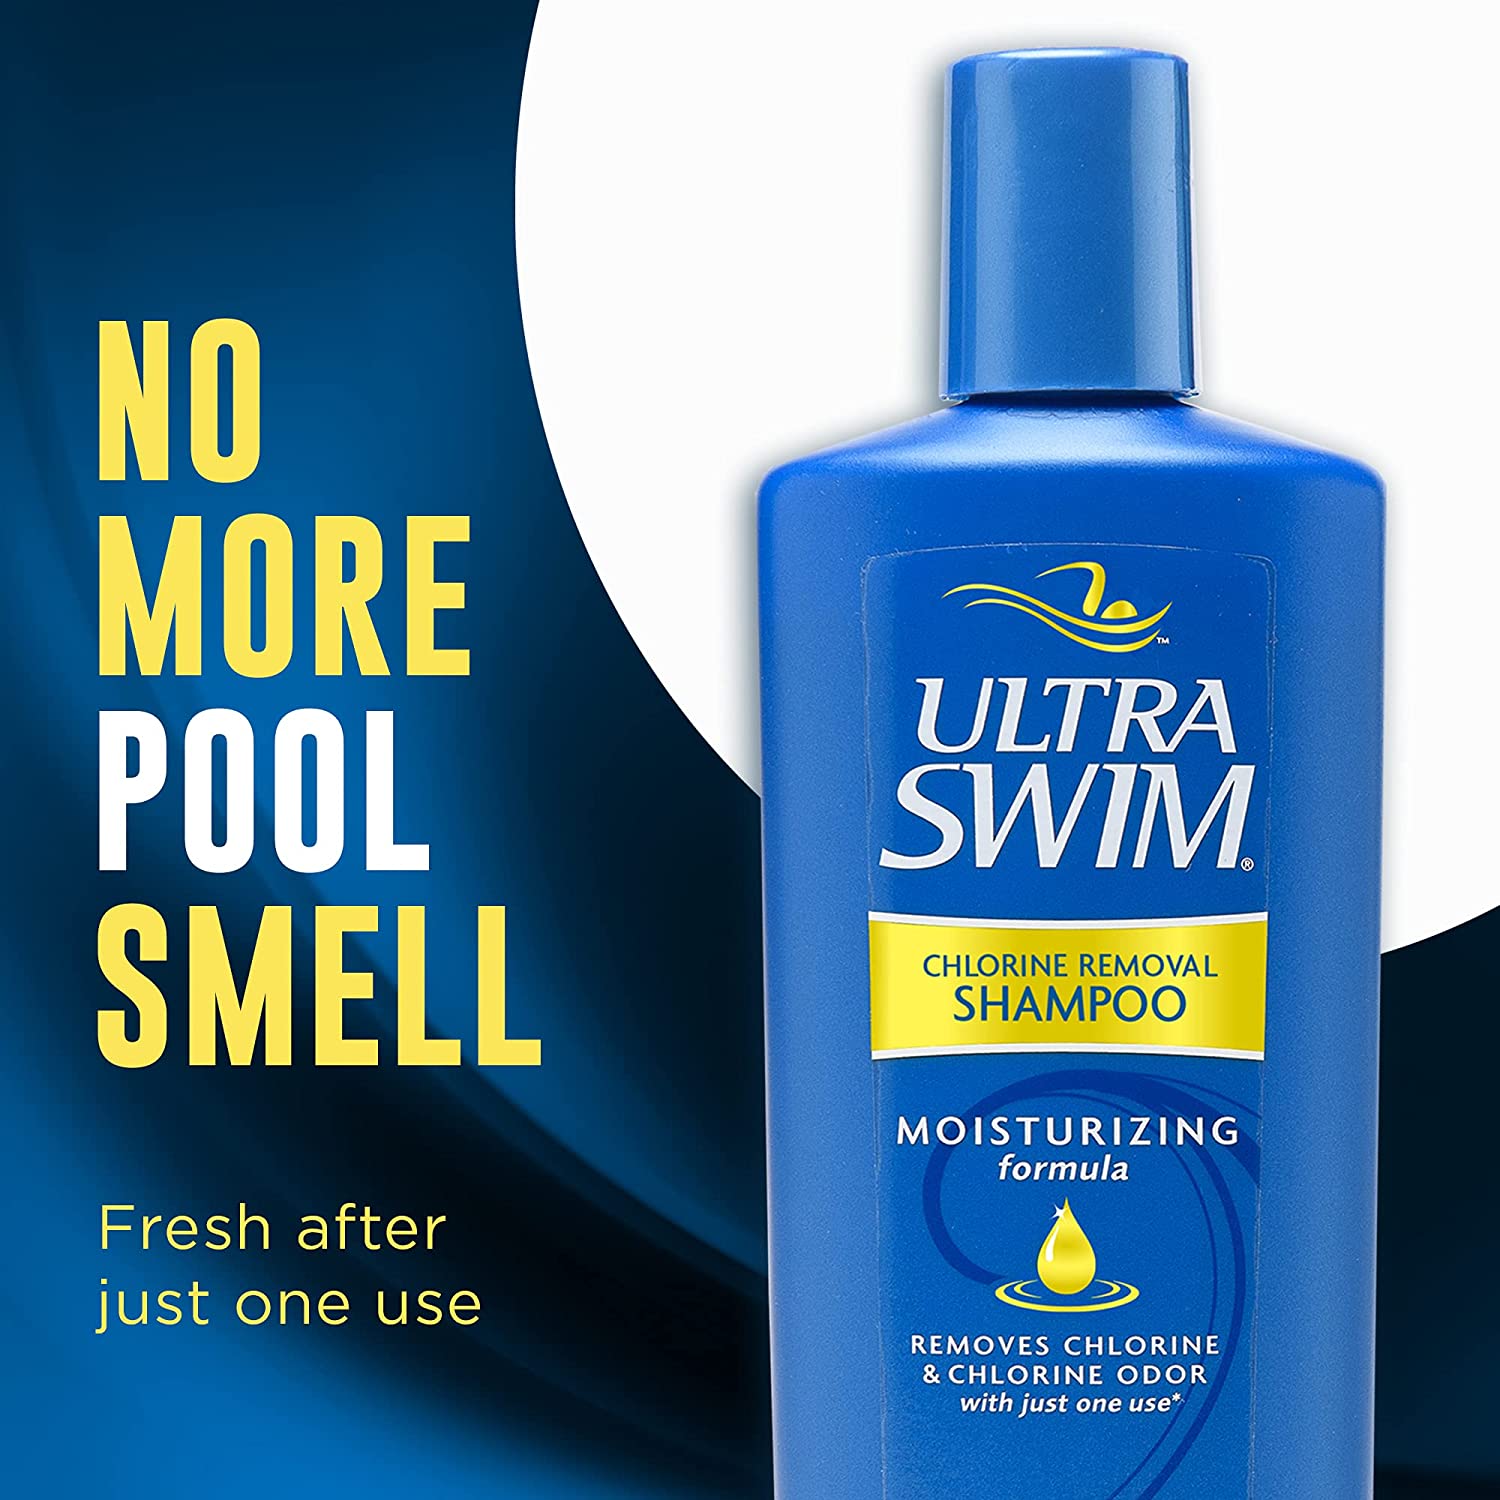 UltraSwim Chlorine Removal Shampoo, Moisturizing Formula 7 oz - image 4 of 12